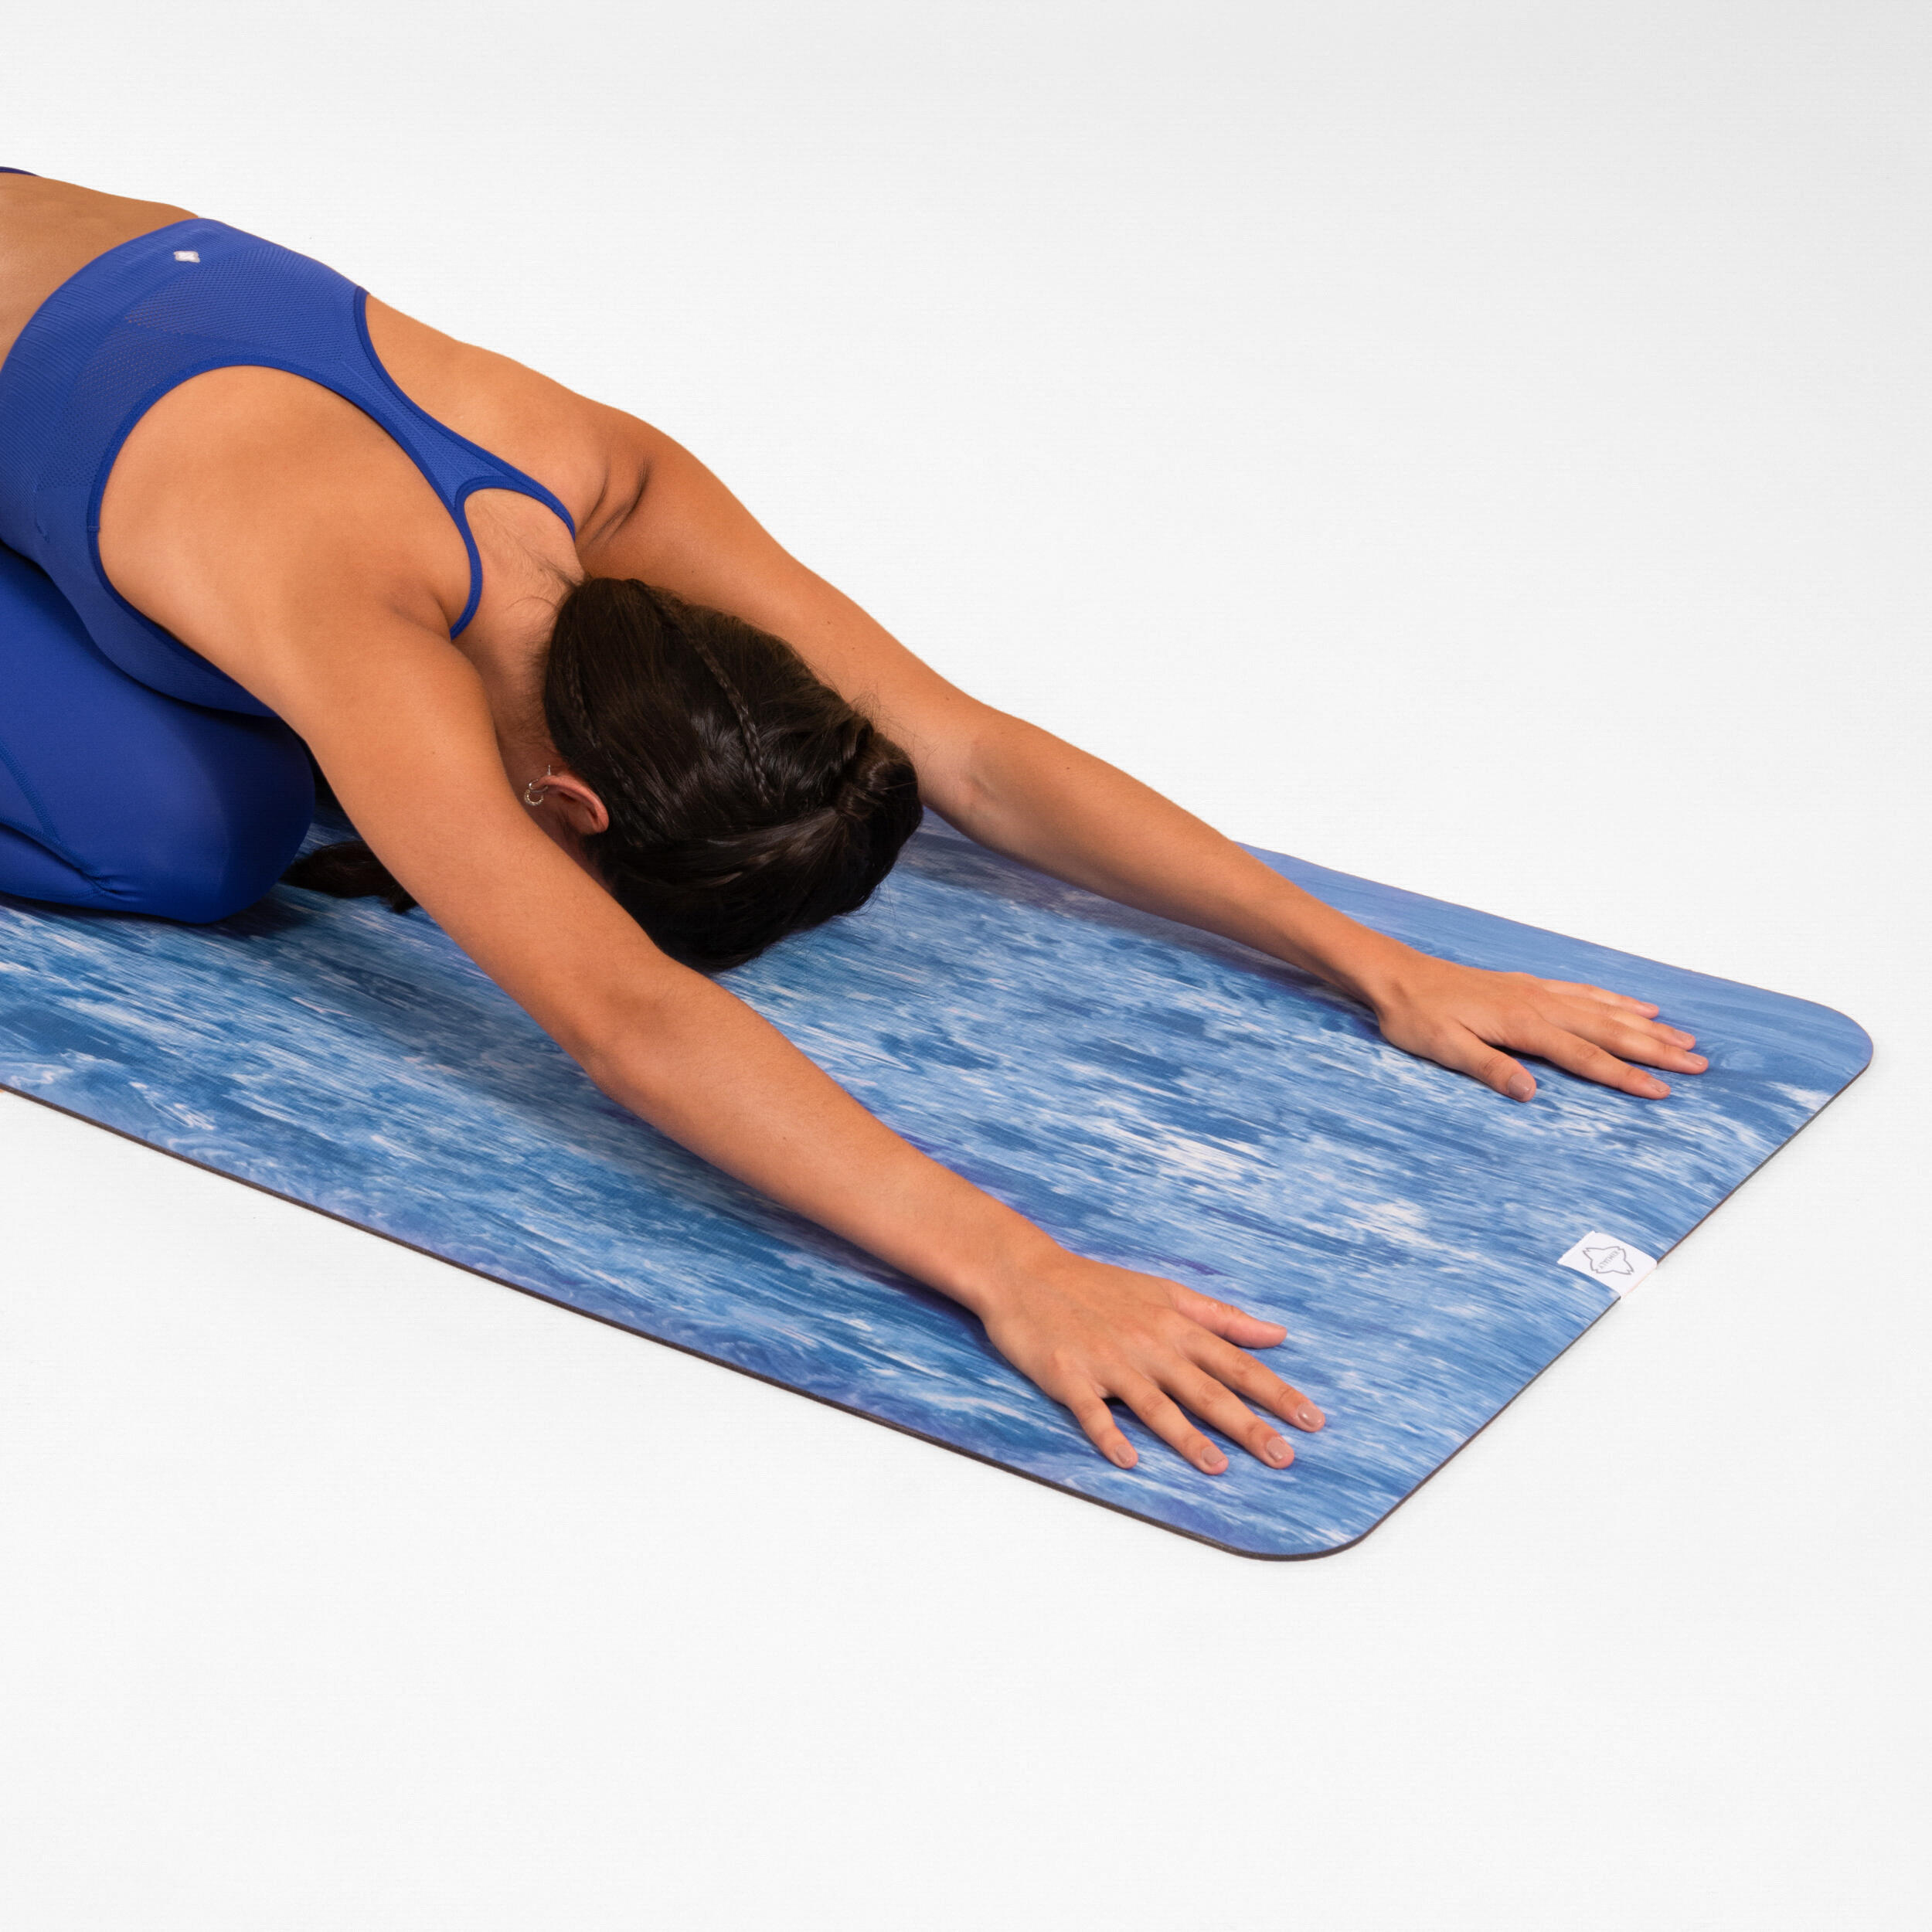 185 cm x 65 cm x 5 mm Yoga Mat Grip - Blue KIMJALY